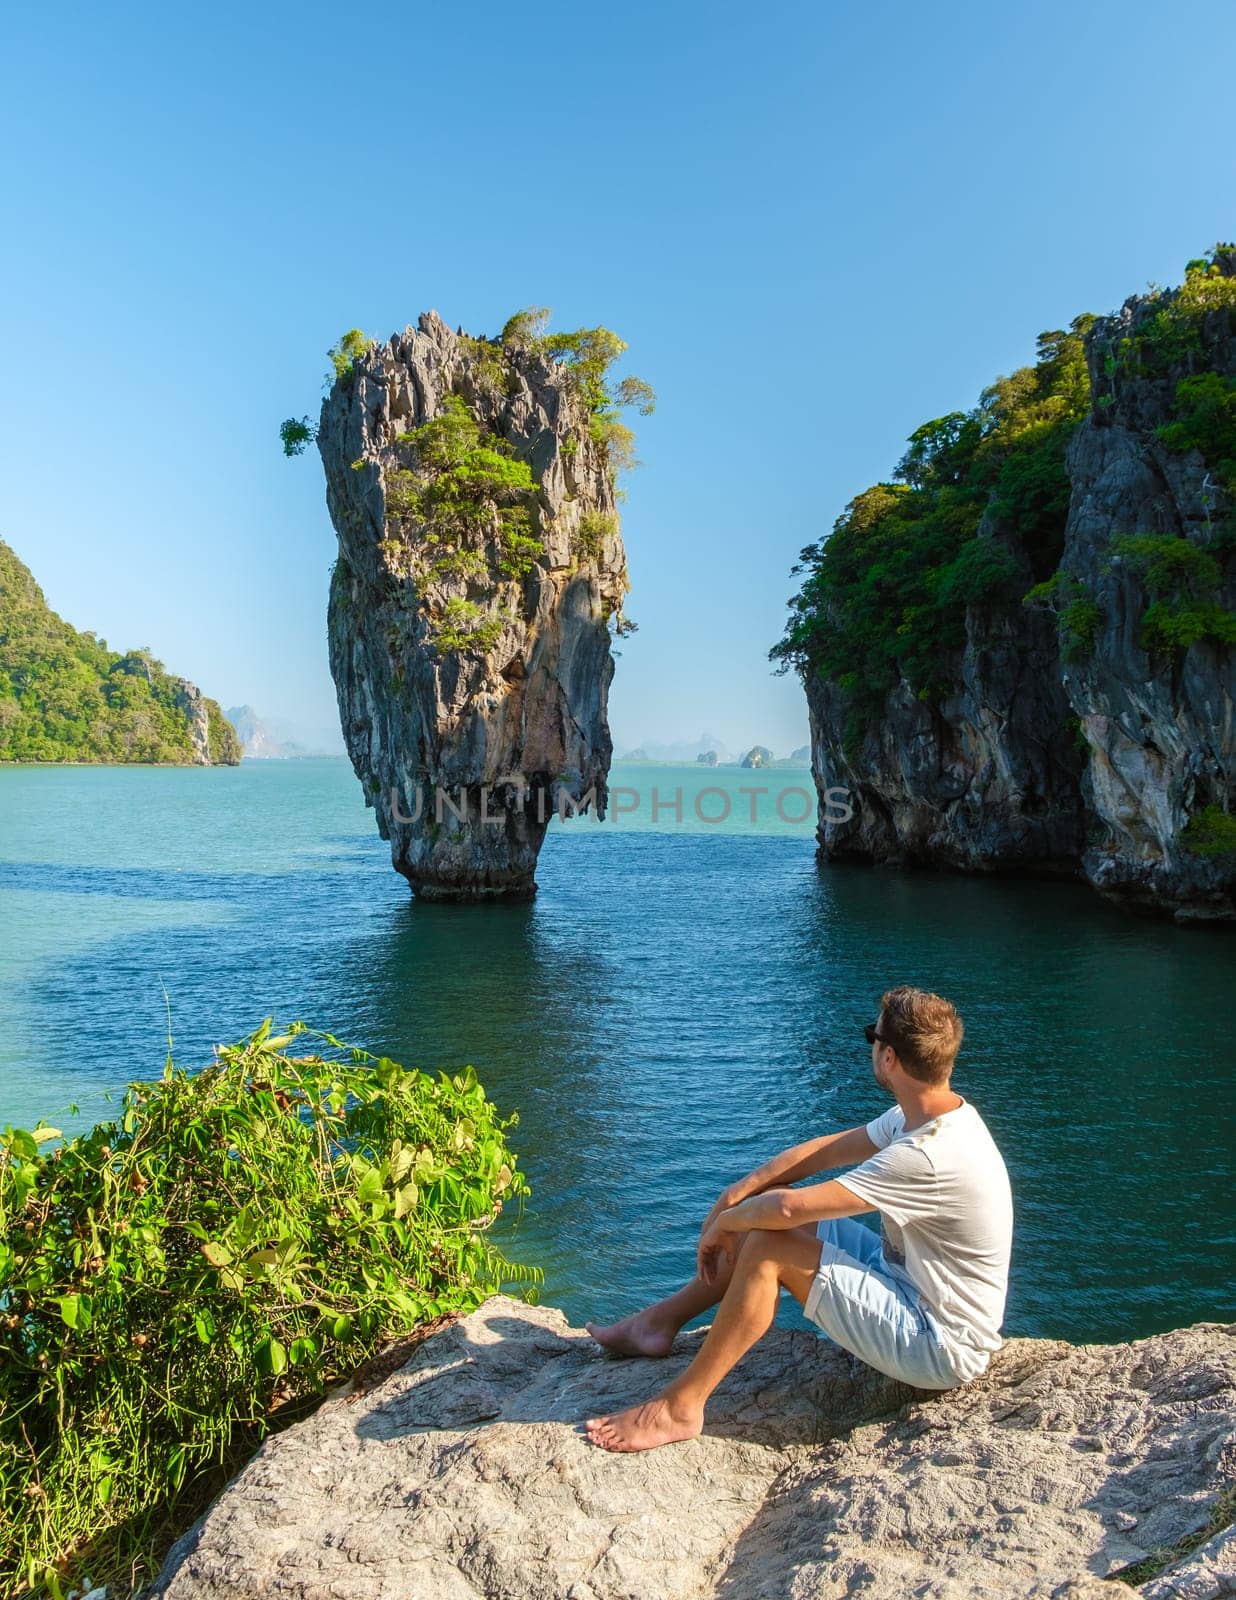 James Bond Island Phangnga Bay Thailand, young man visits the Island near Phuket Thailand, men on a boat trip at Phangnga Bay Thailand